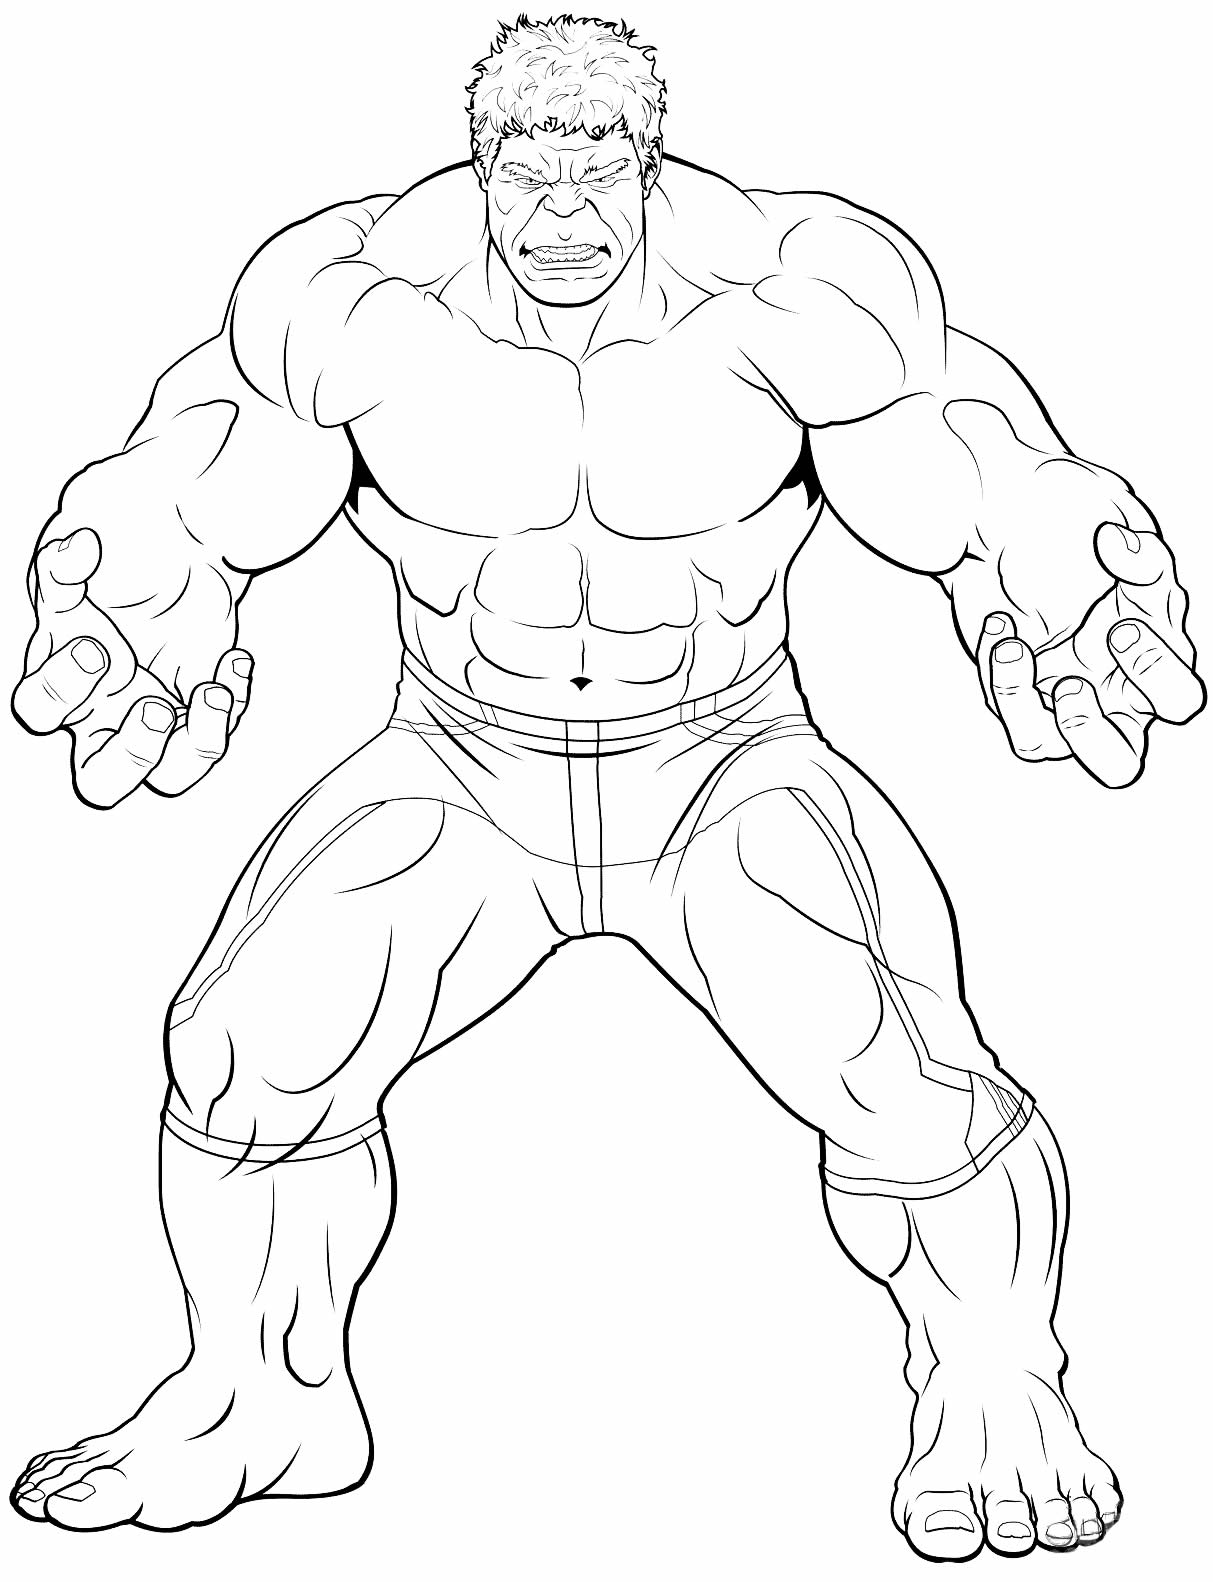 Desenho de Hulk para pintar e colorir